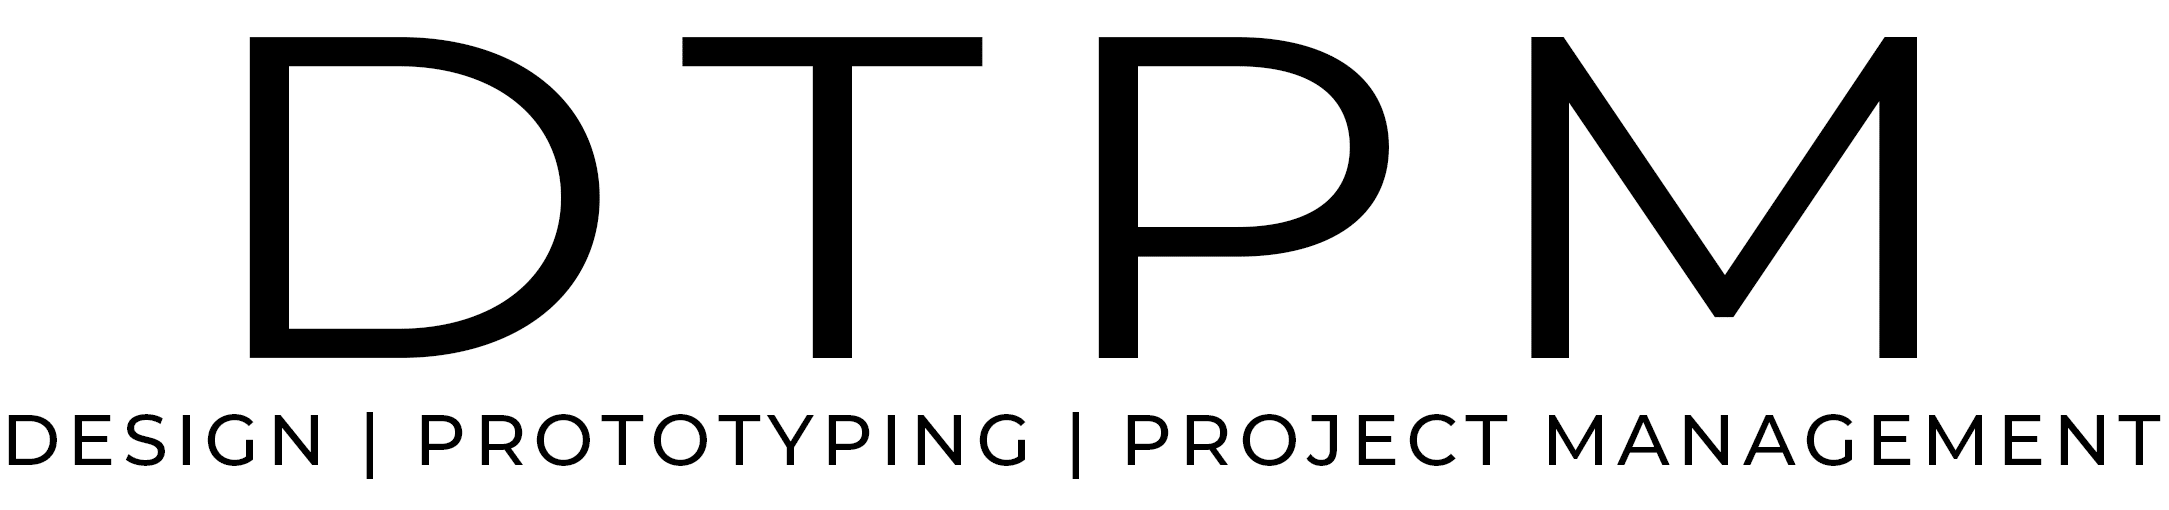 dtpm-logo-high-res-v3